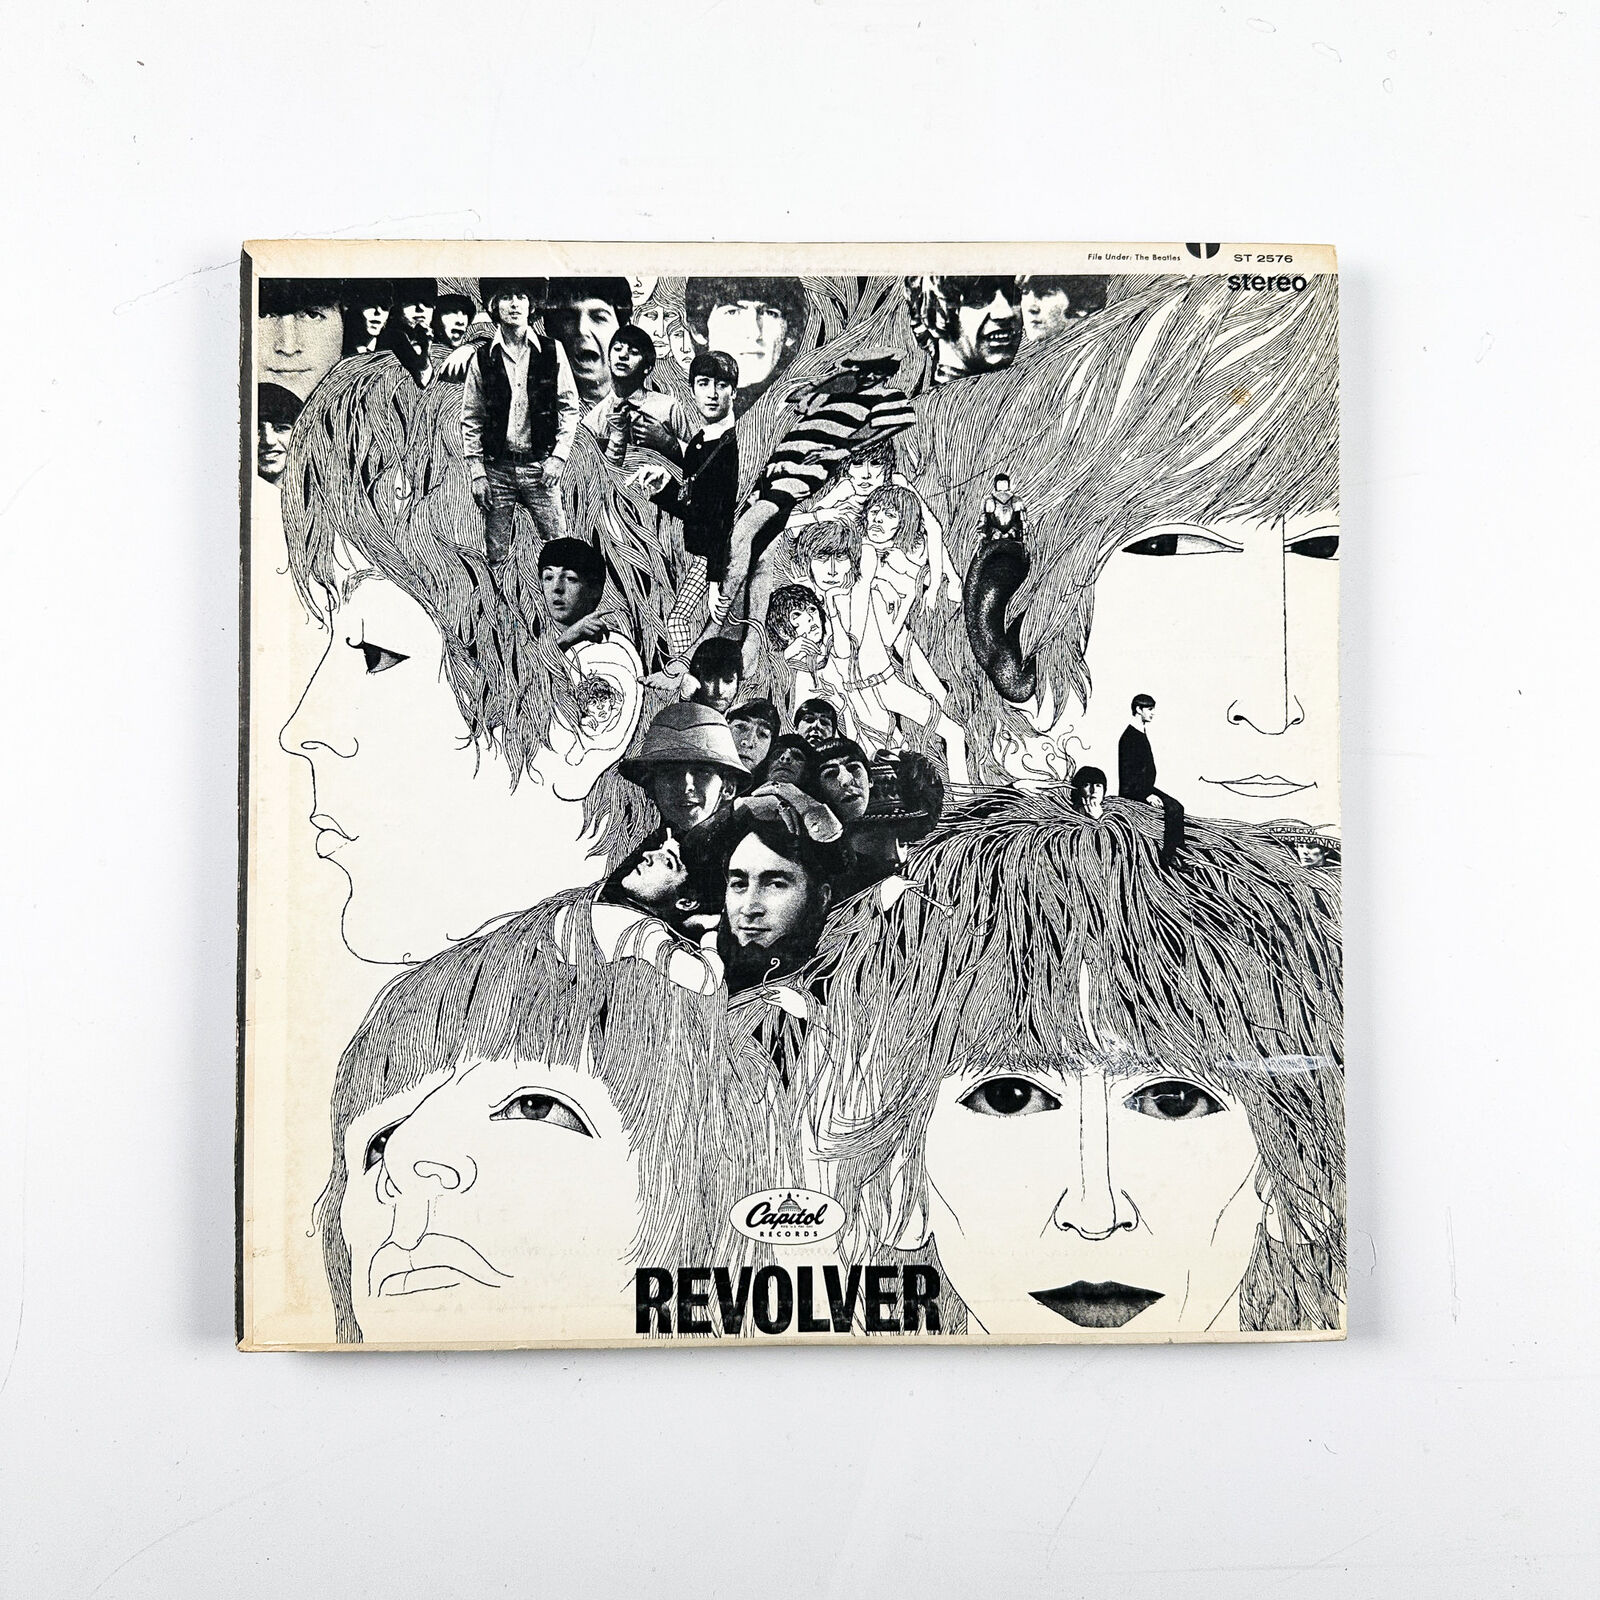 The Beatles - Revolver- Vinyl LP Record - 1966